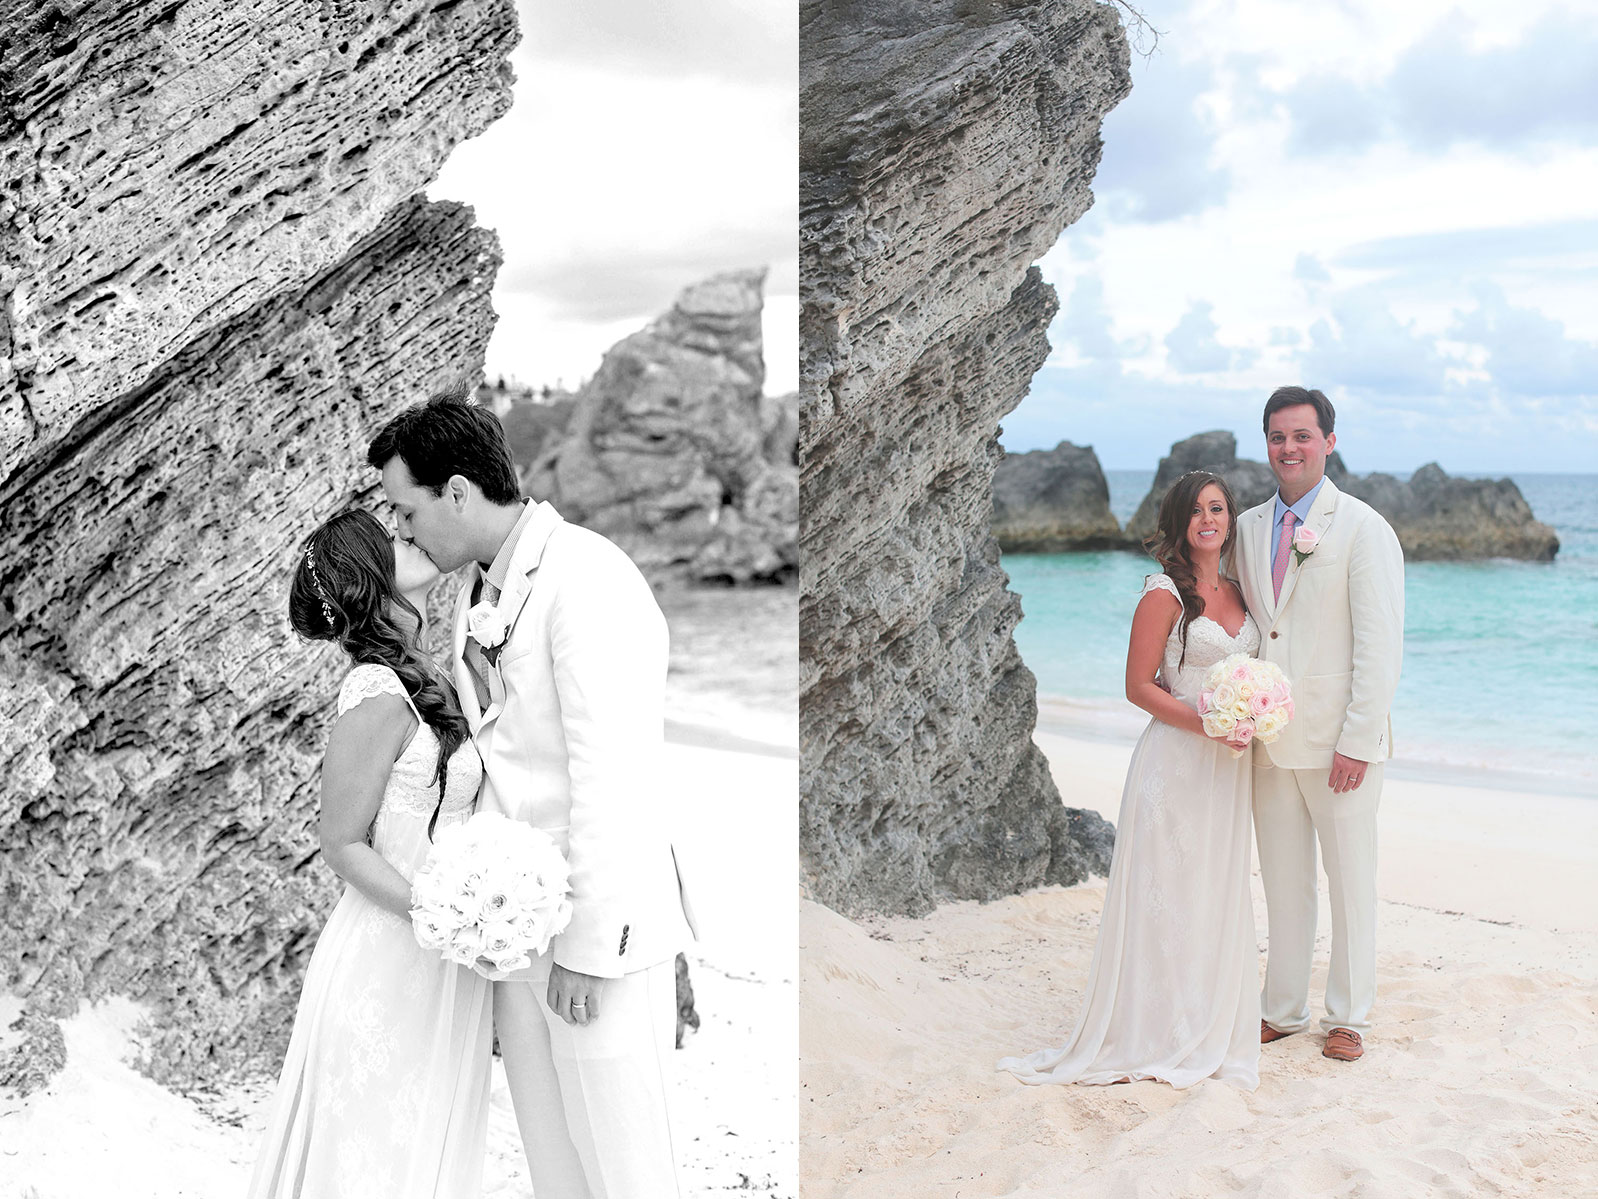 35-JM-BERMDUA-WEDDING-PHOTOGRAPHY-BRIDE-GROOM-DESTINATION-PHOTOGRAPHER-ISLAND-TROPICAL.jpg